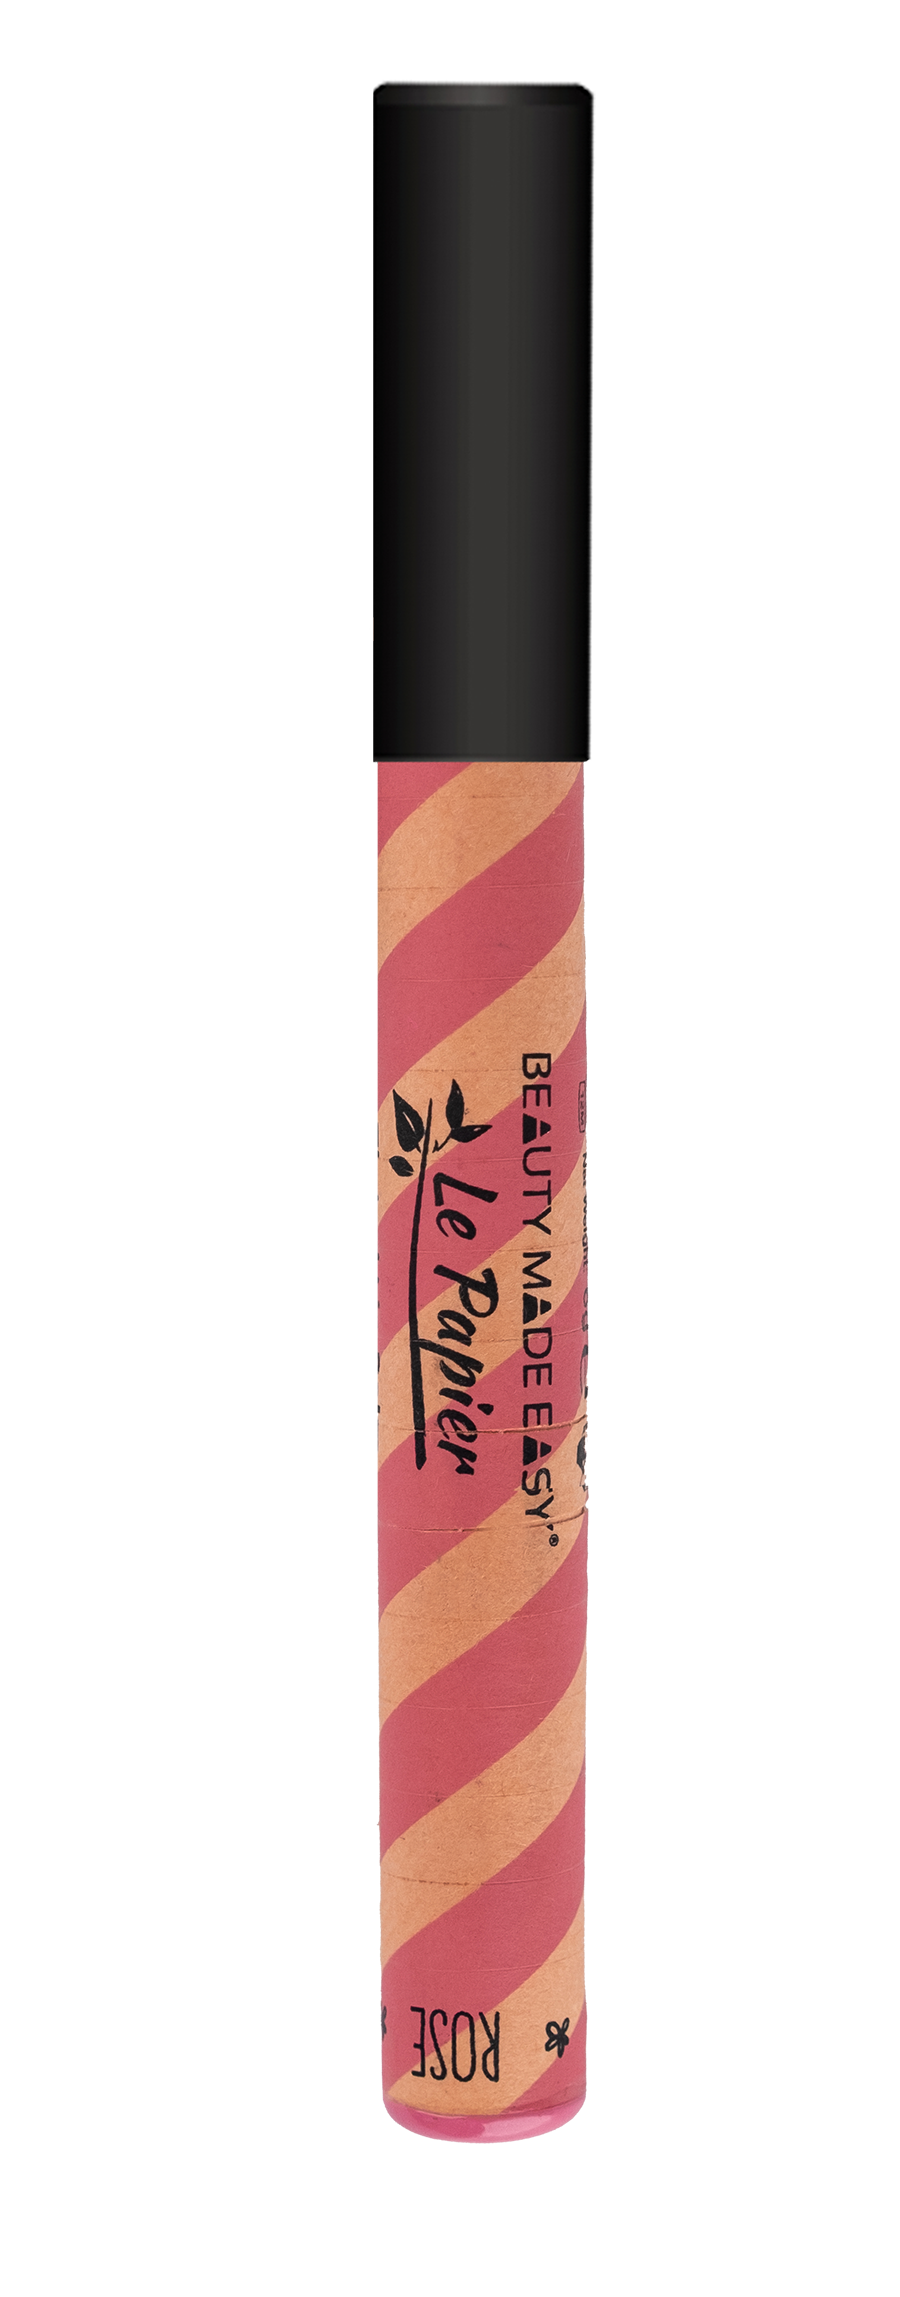 BME-2012 Hydrating Lip Tint - ROSE - 6 g